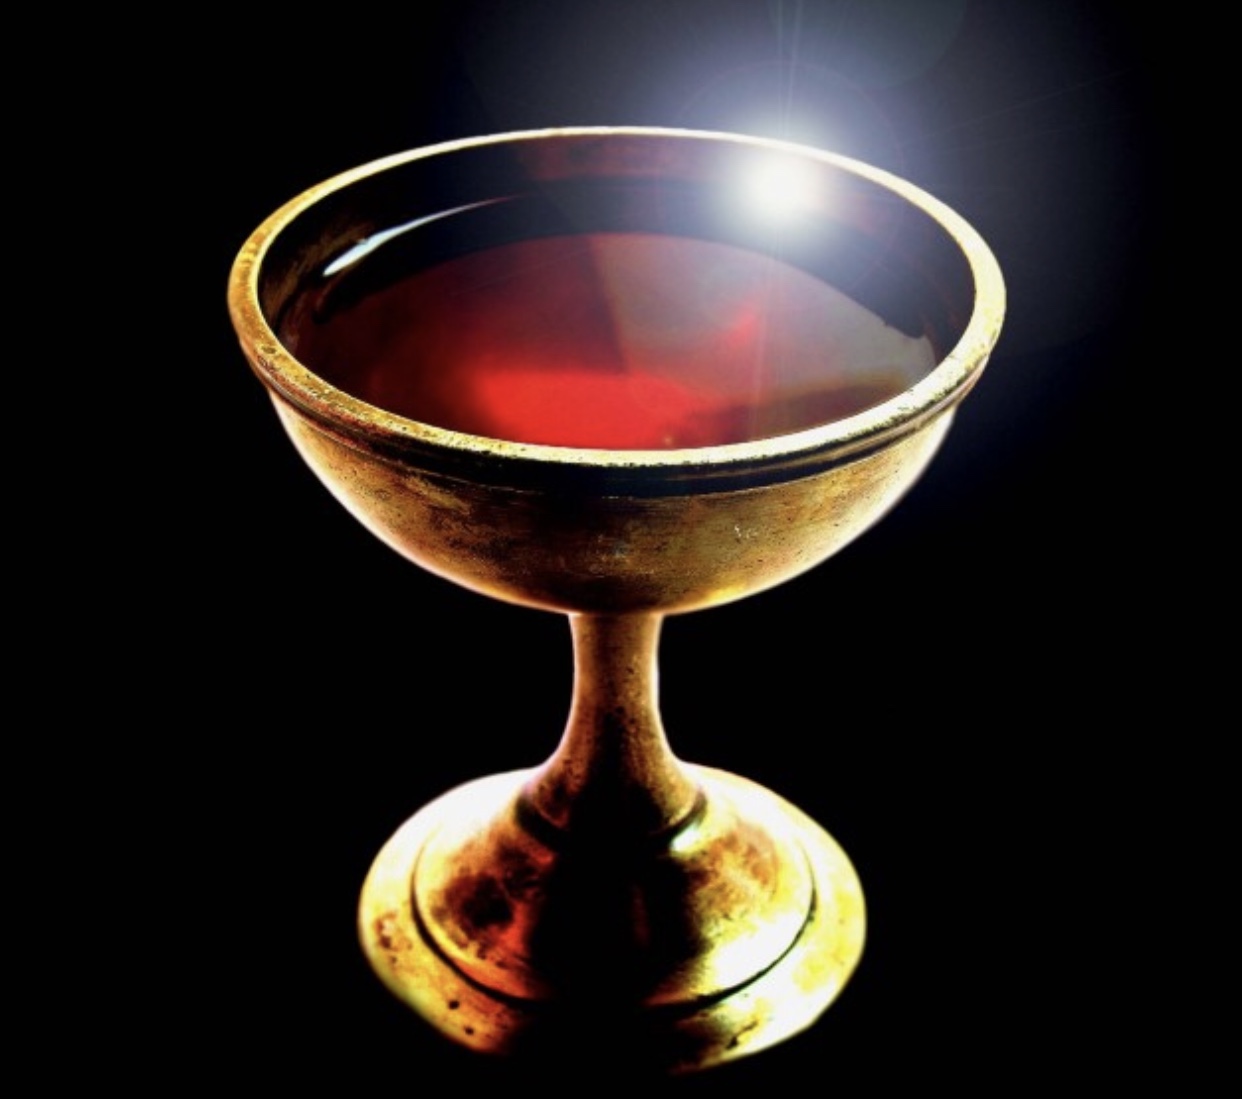 Чашу полную вина. Чаша Святого Грааля. Святой Грааль. Кубок Святой Грааль. Священный Грааль — чаша.